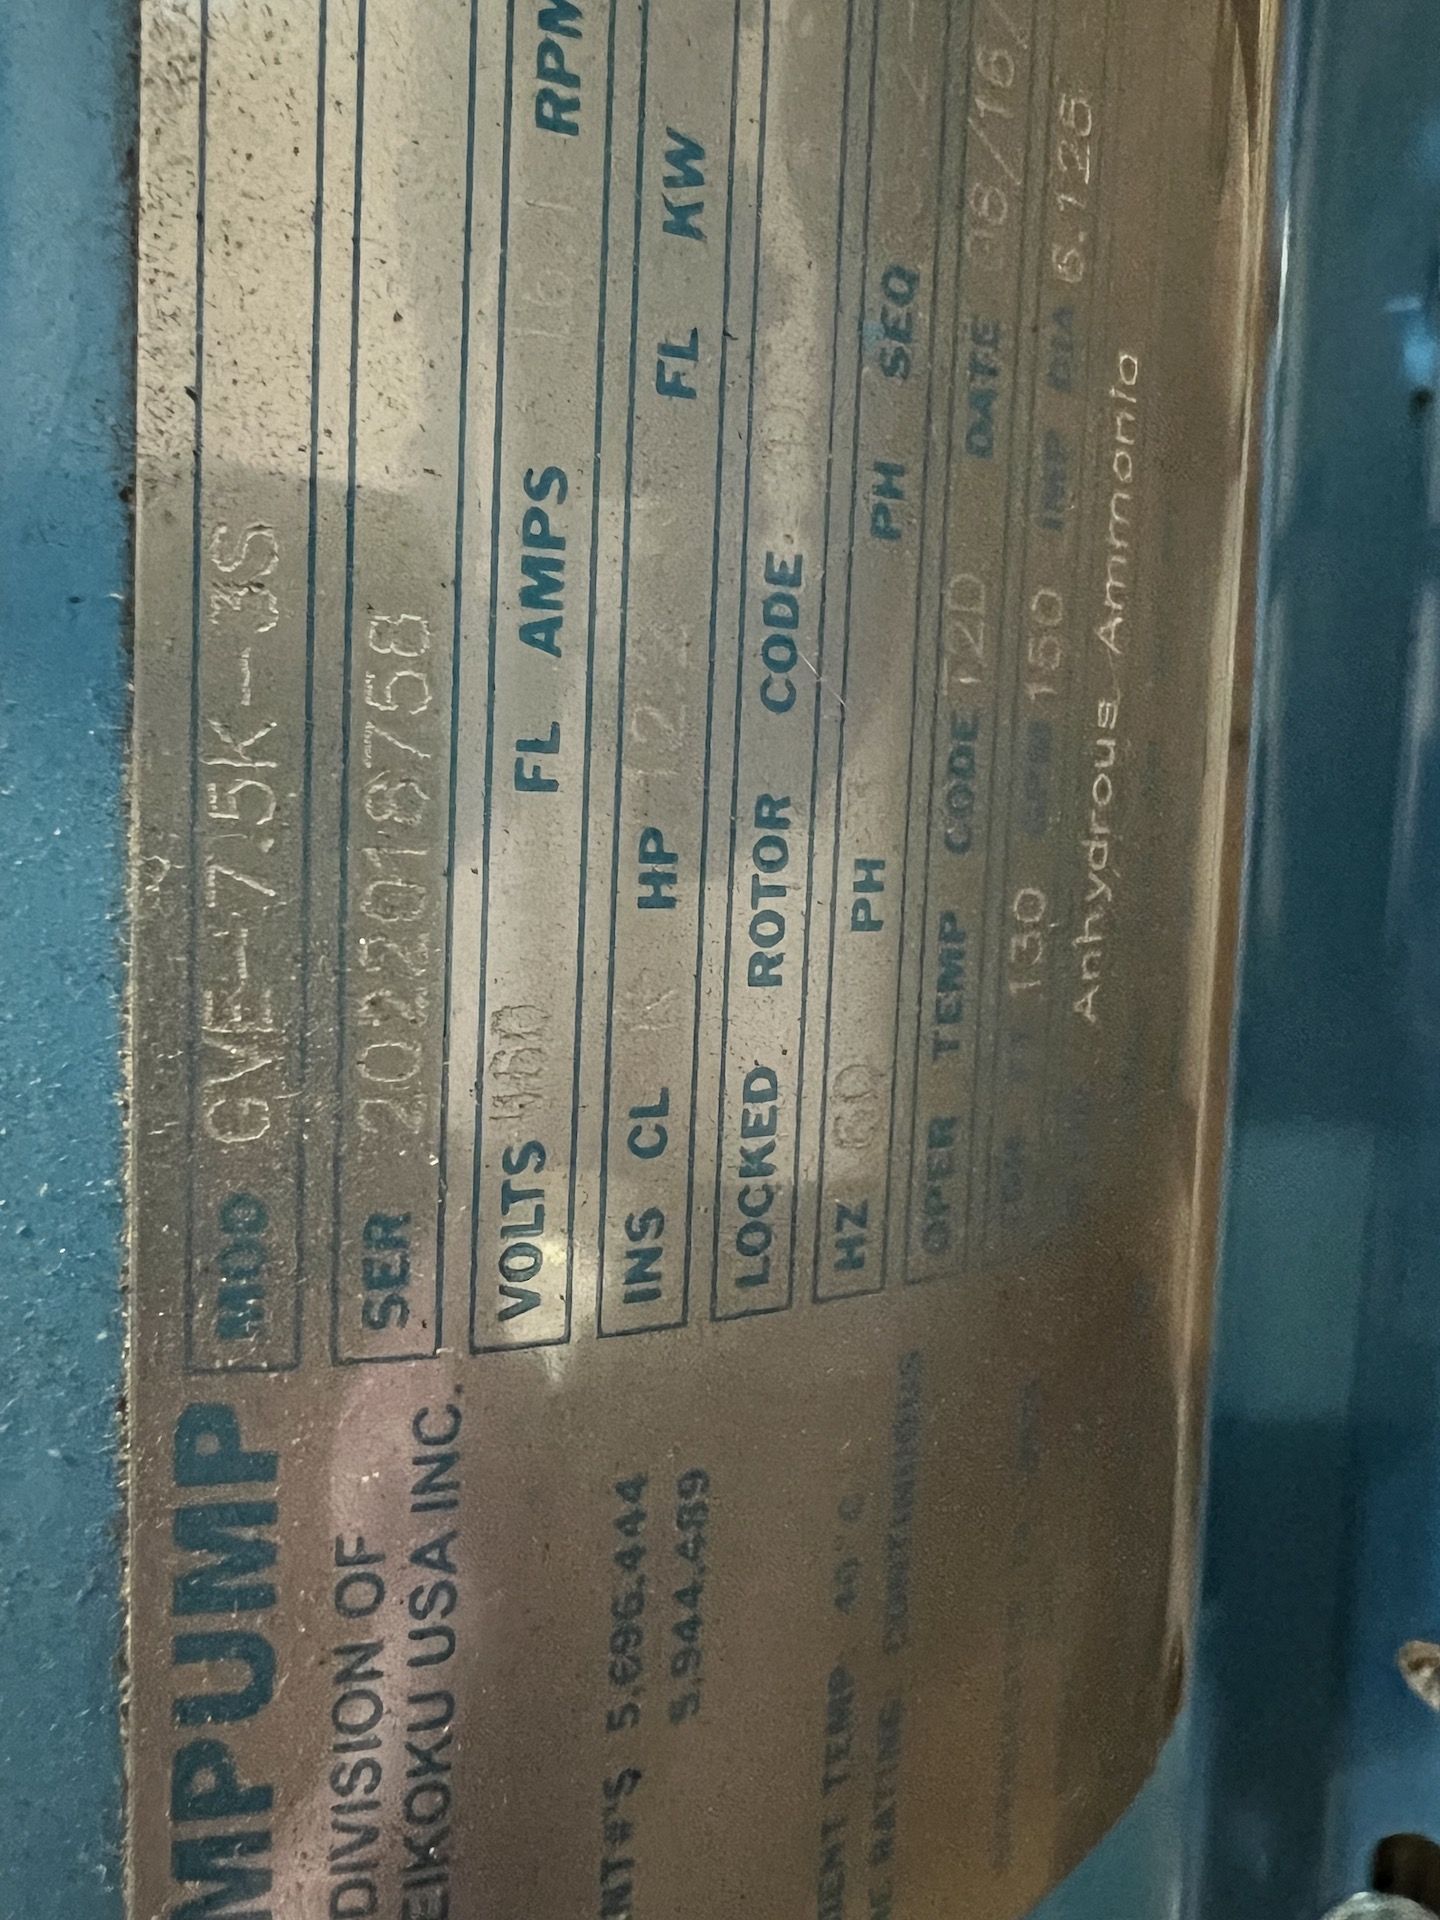 NEW CHEMPUMP G-SERIES AMMONIA PUMP, MODEL GVE-7.5K-3S, 12.2 HP, 460 V (SIMPLE LOADING FEE $110) - Image 6 of 12